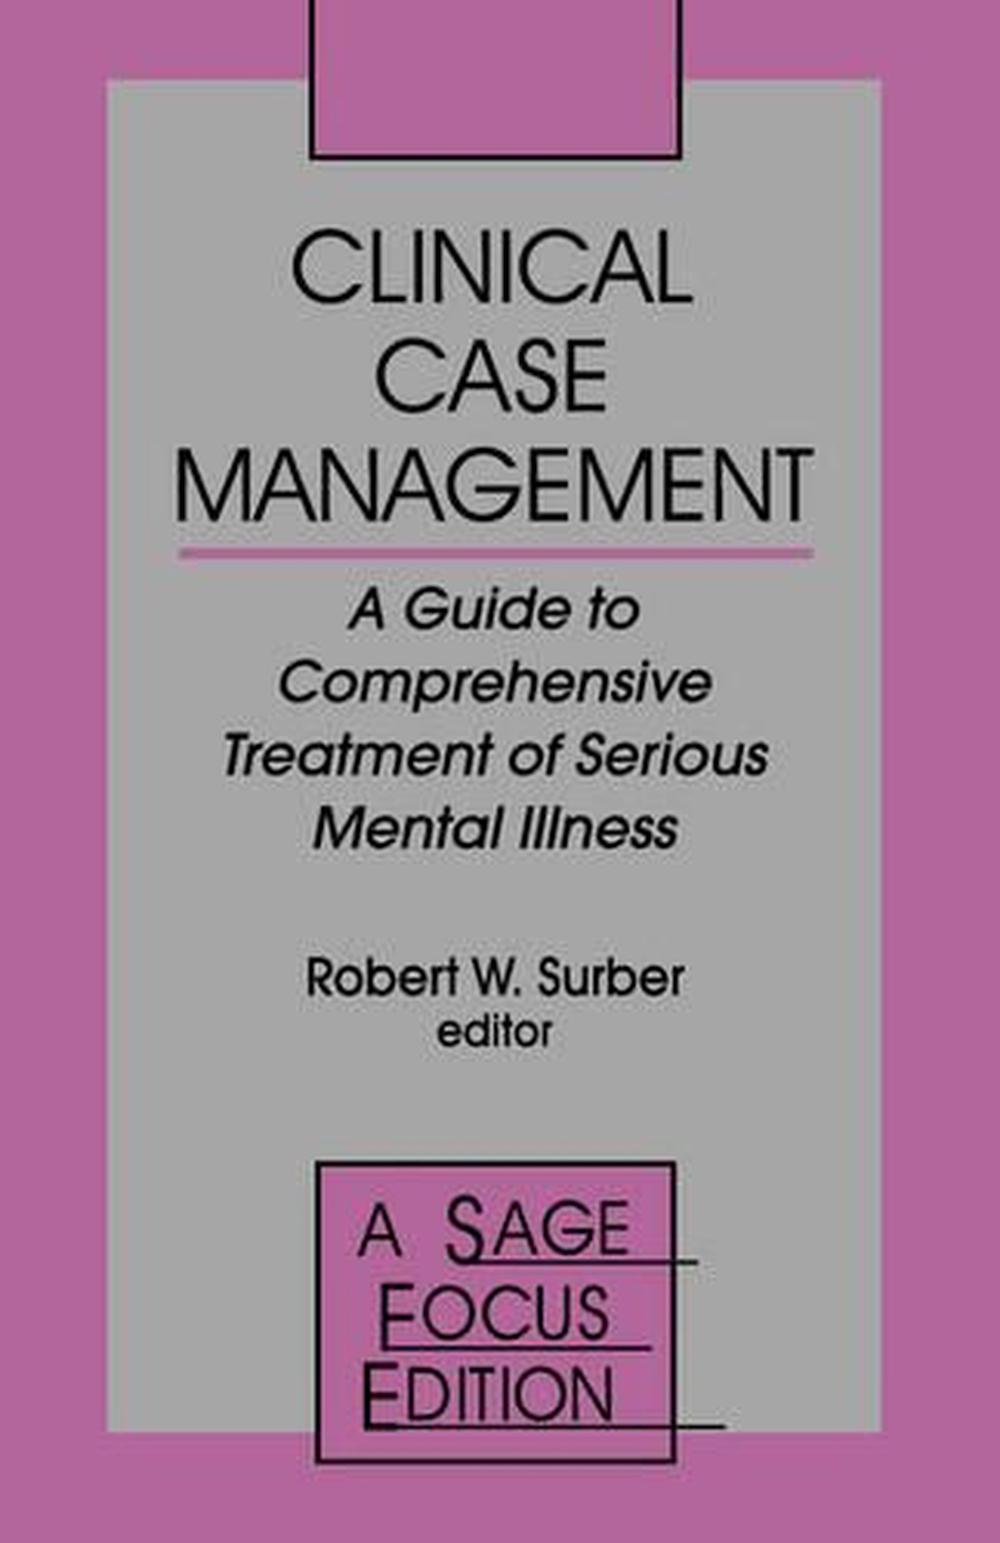 mental health care patient management system case study